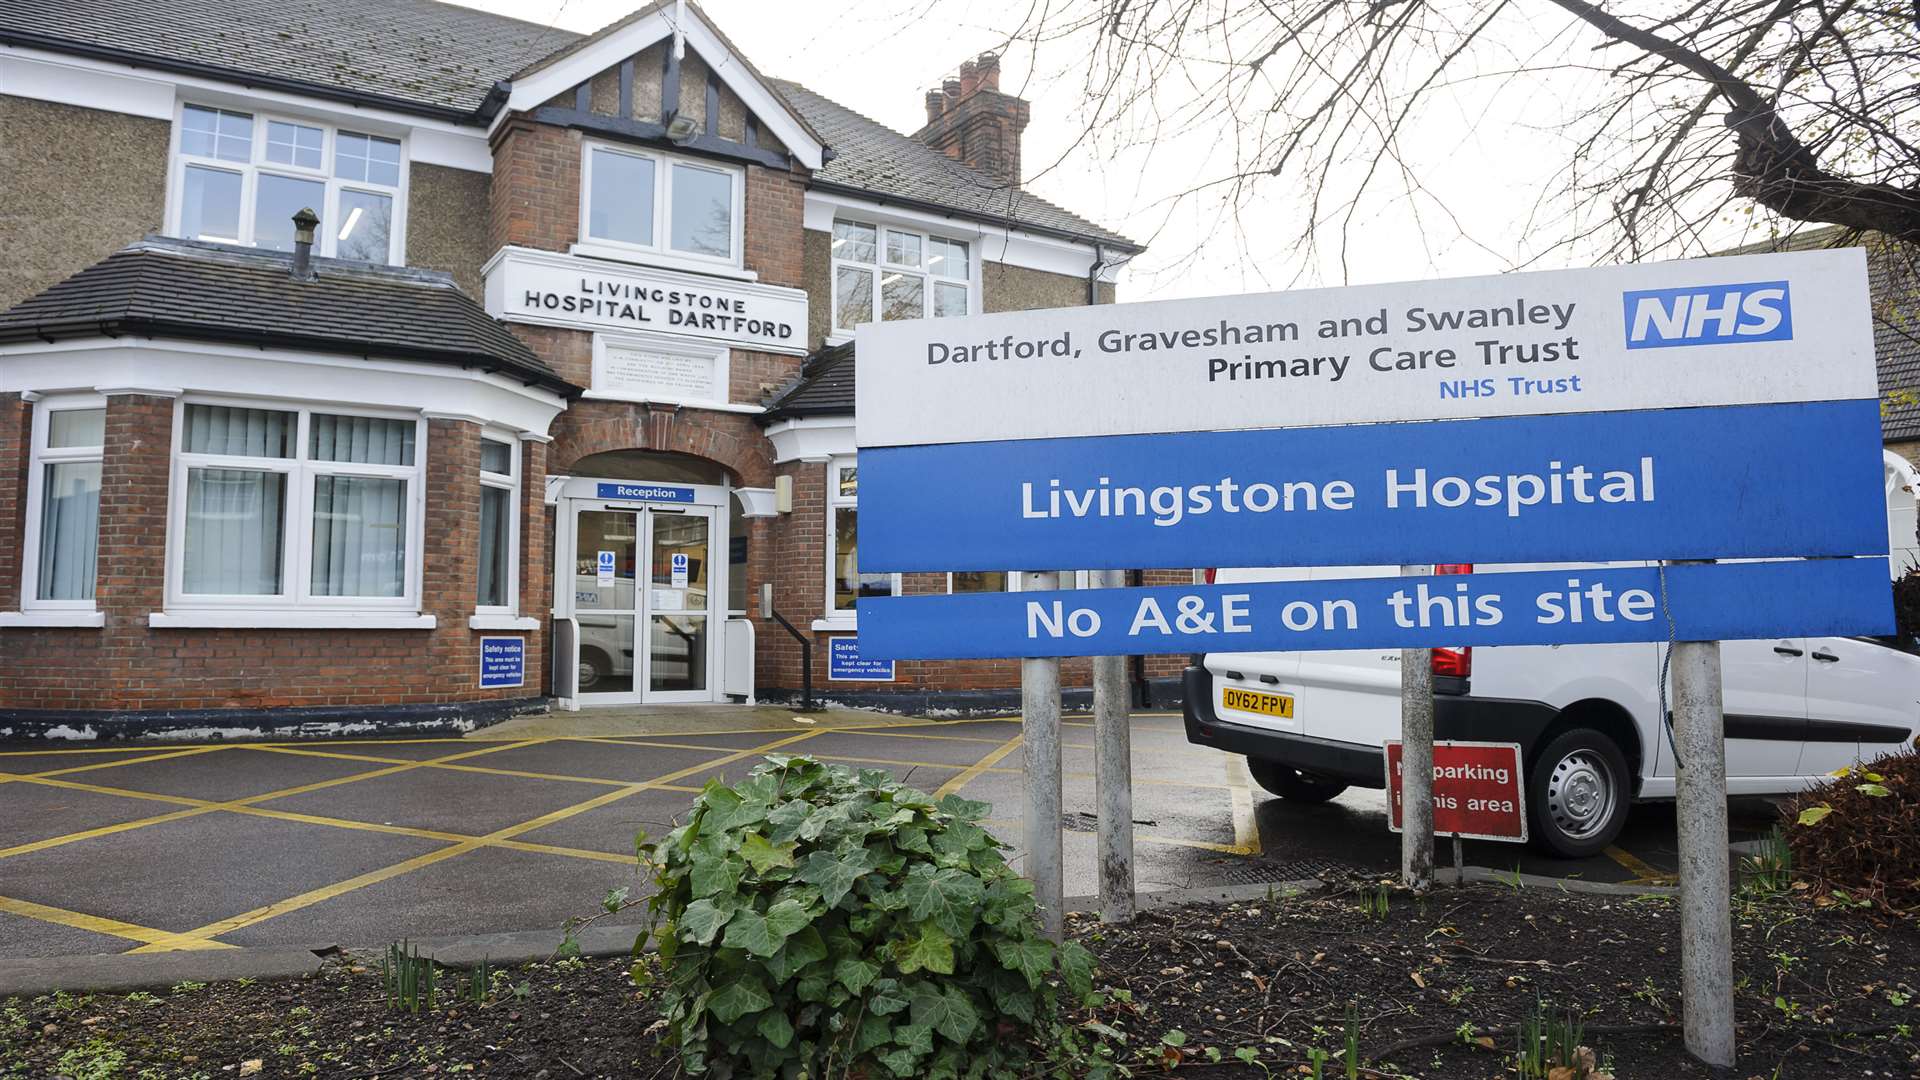 Livingstone Community Hospital, East Hill, Dartford.